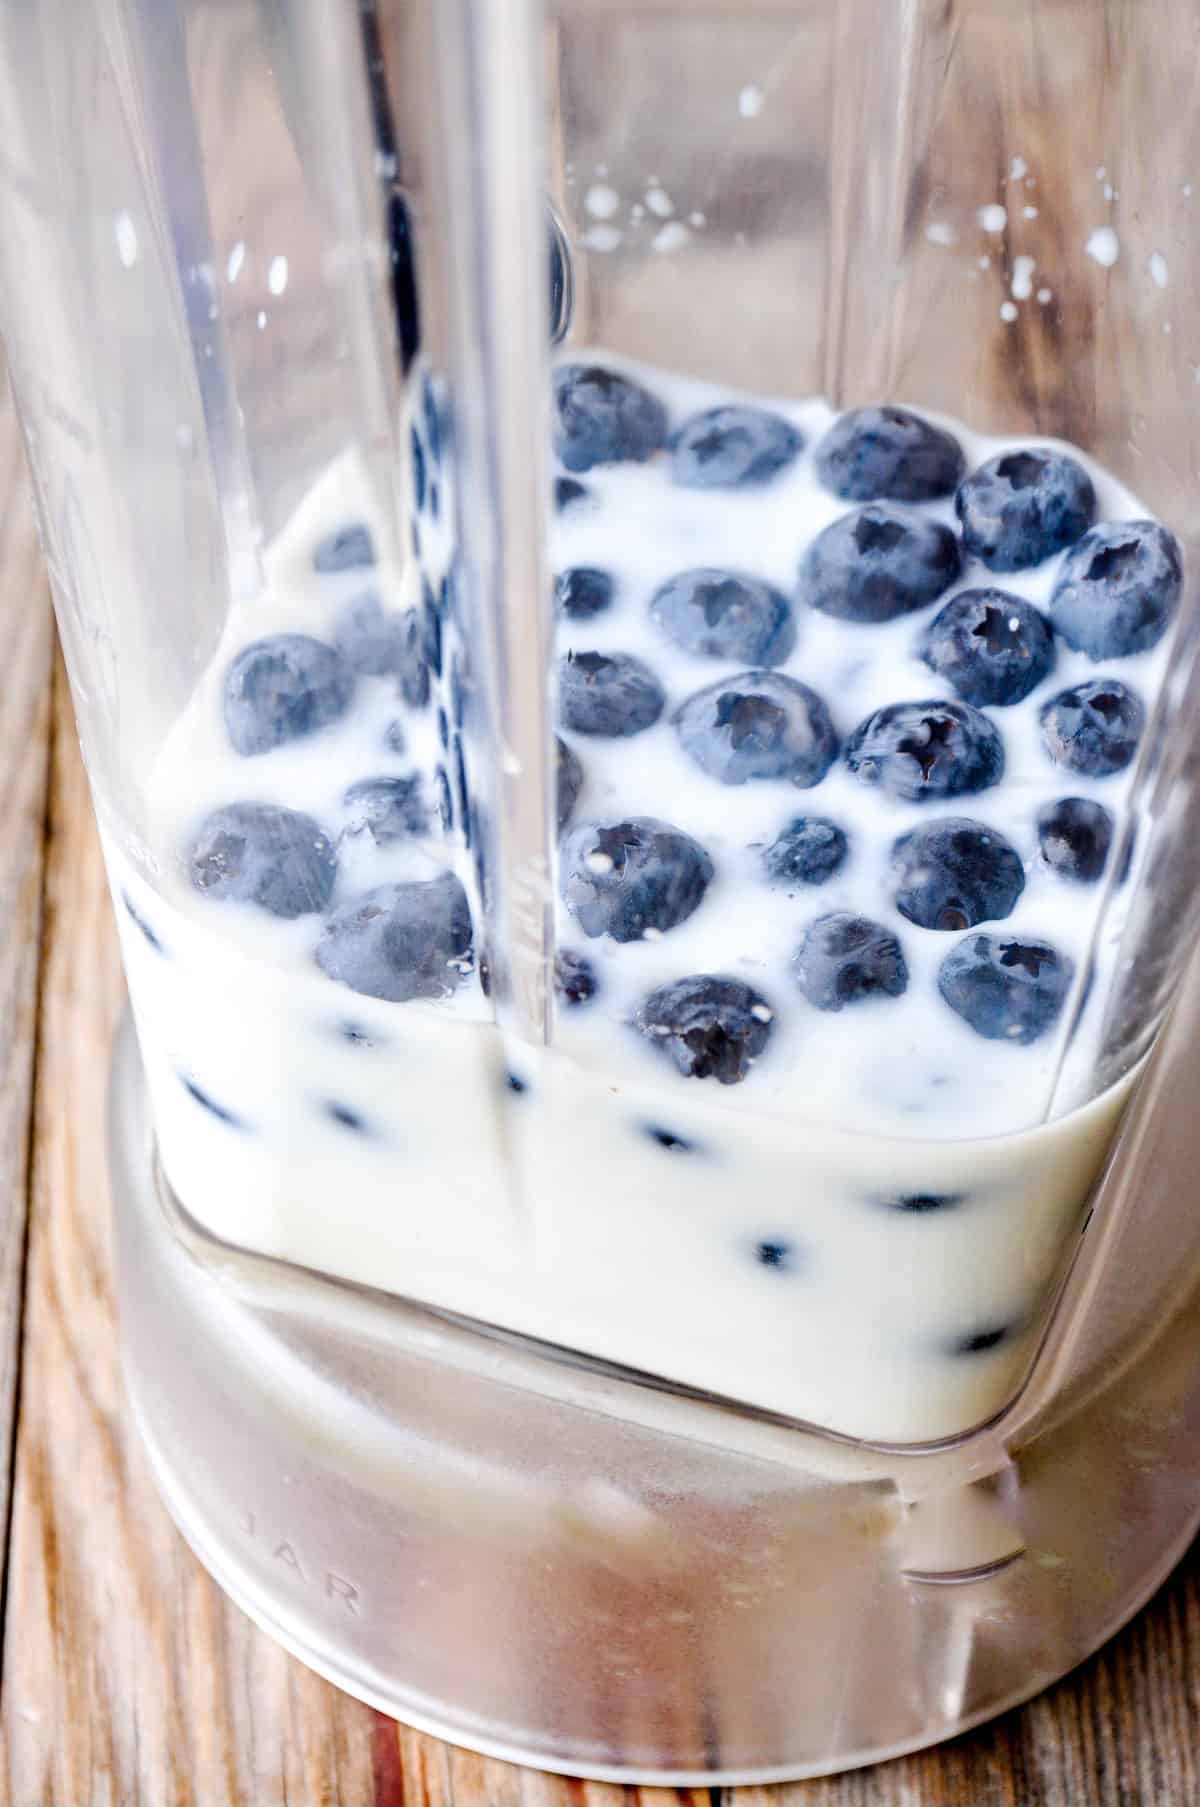 Plain Greek yogurt, milk, and blueberries in blender